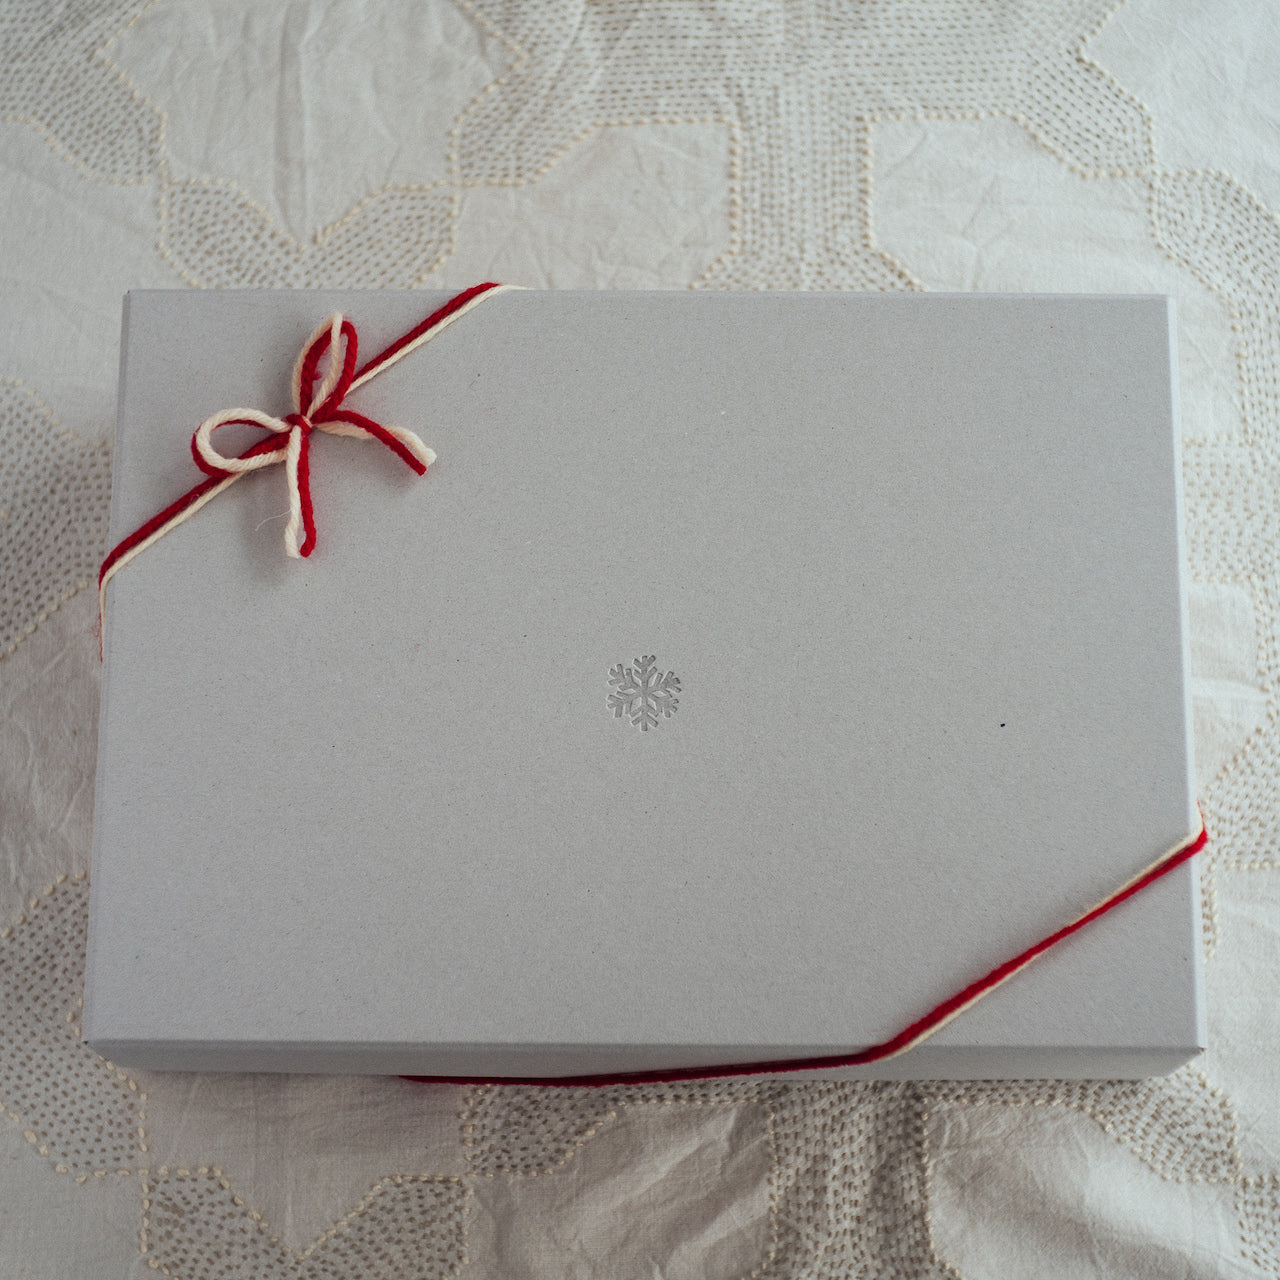 【Gift Box】マリールゥのいなほパンケーキミックス3個